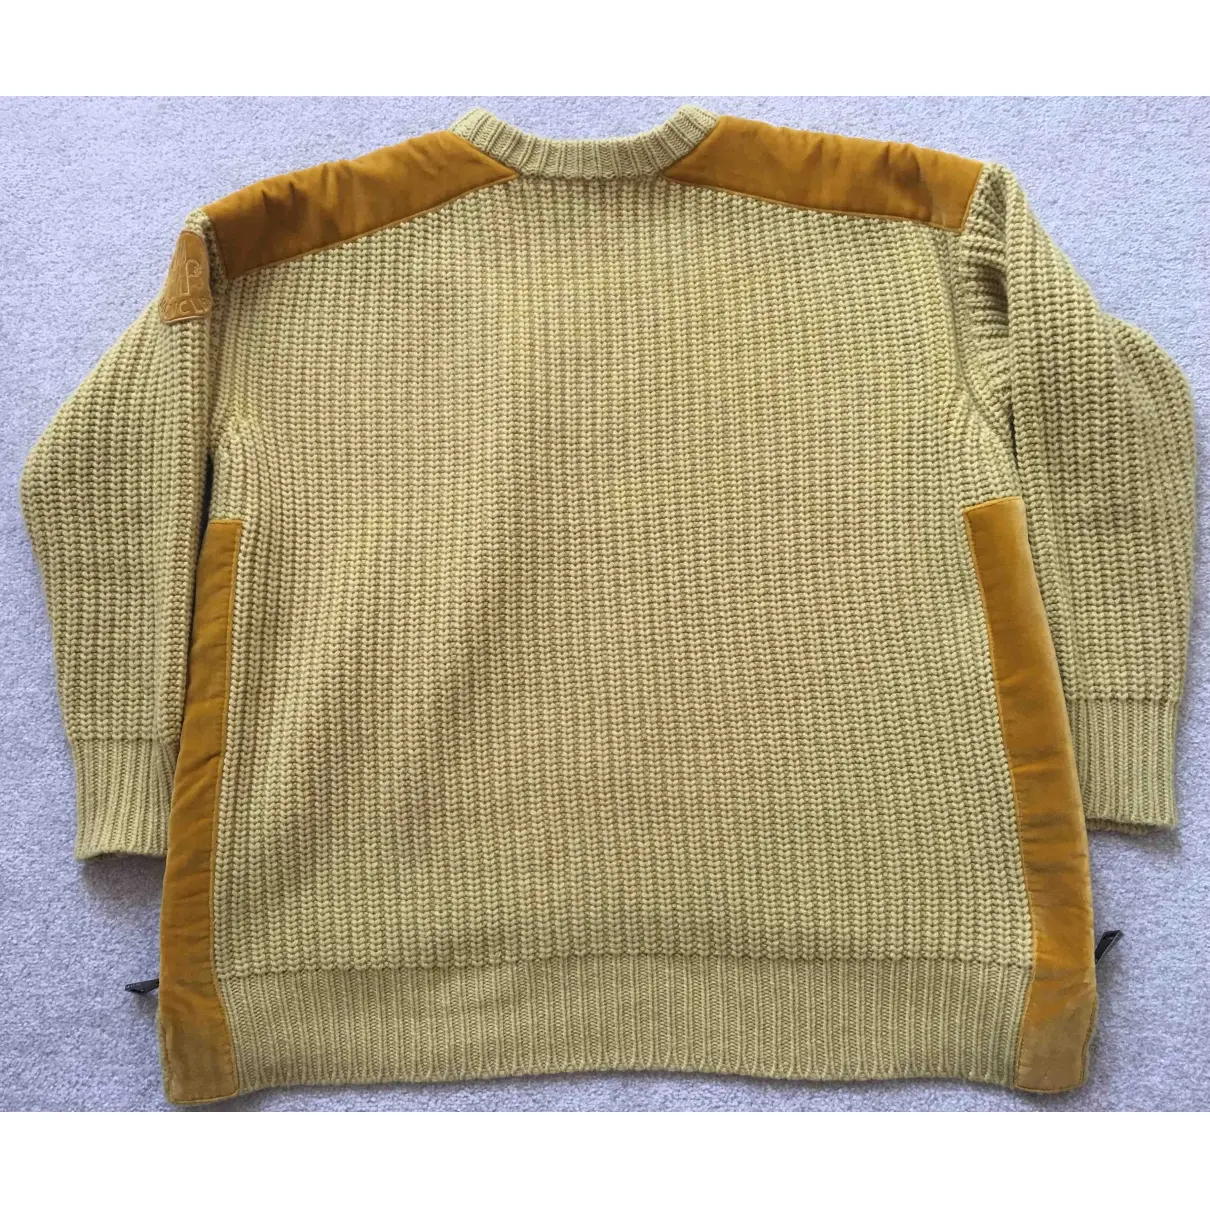 Moncler Genius Moncler n°2 1952 + Valextra wool jumper for sale